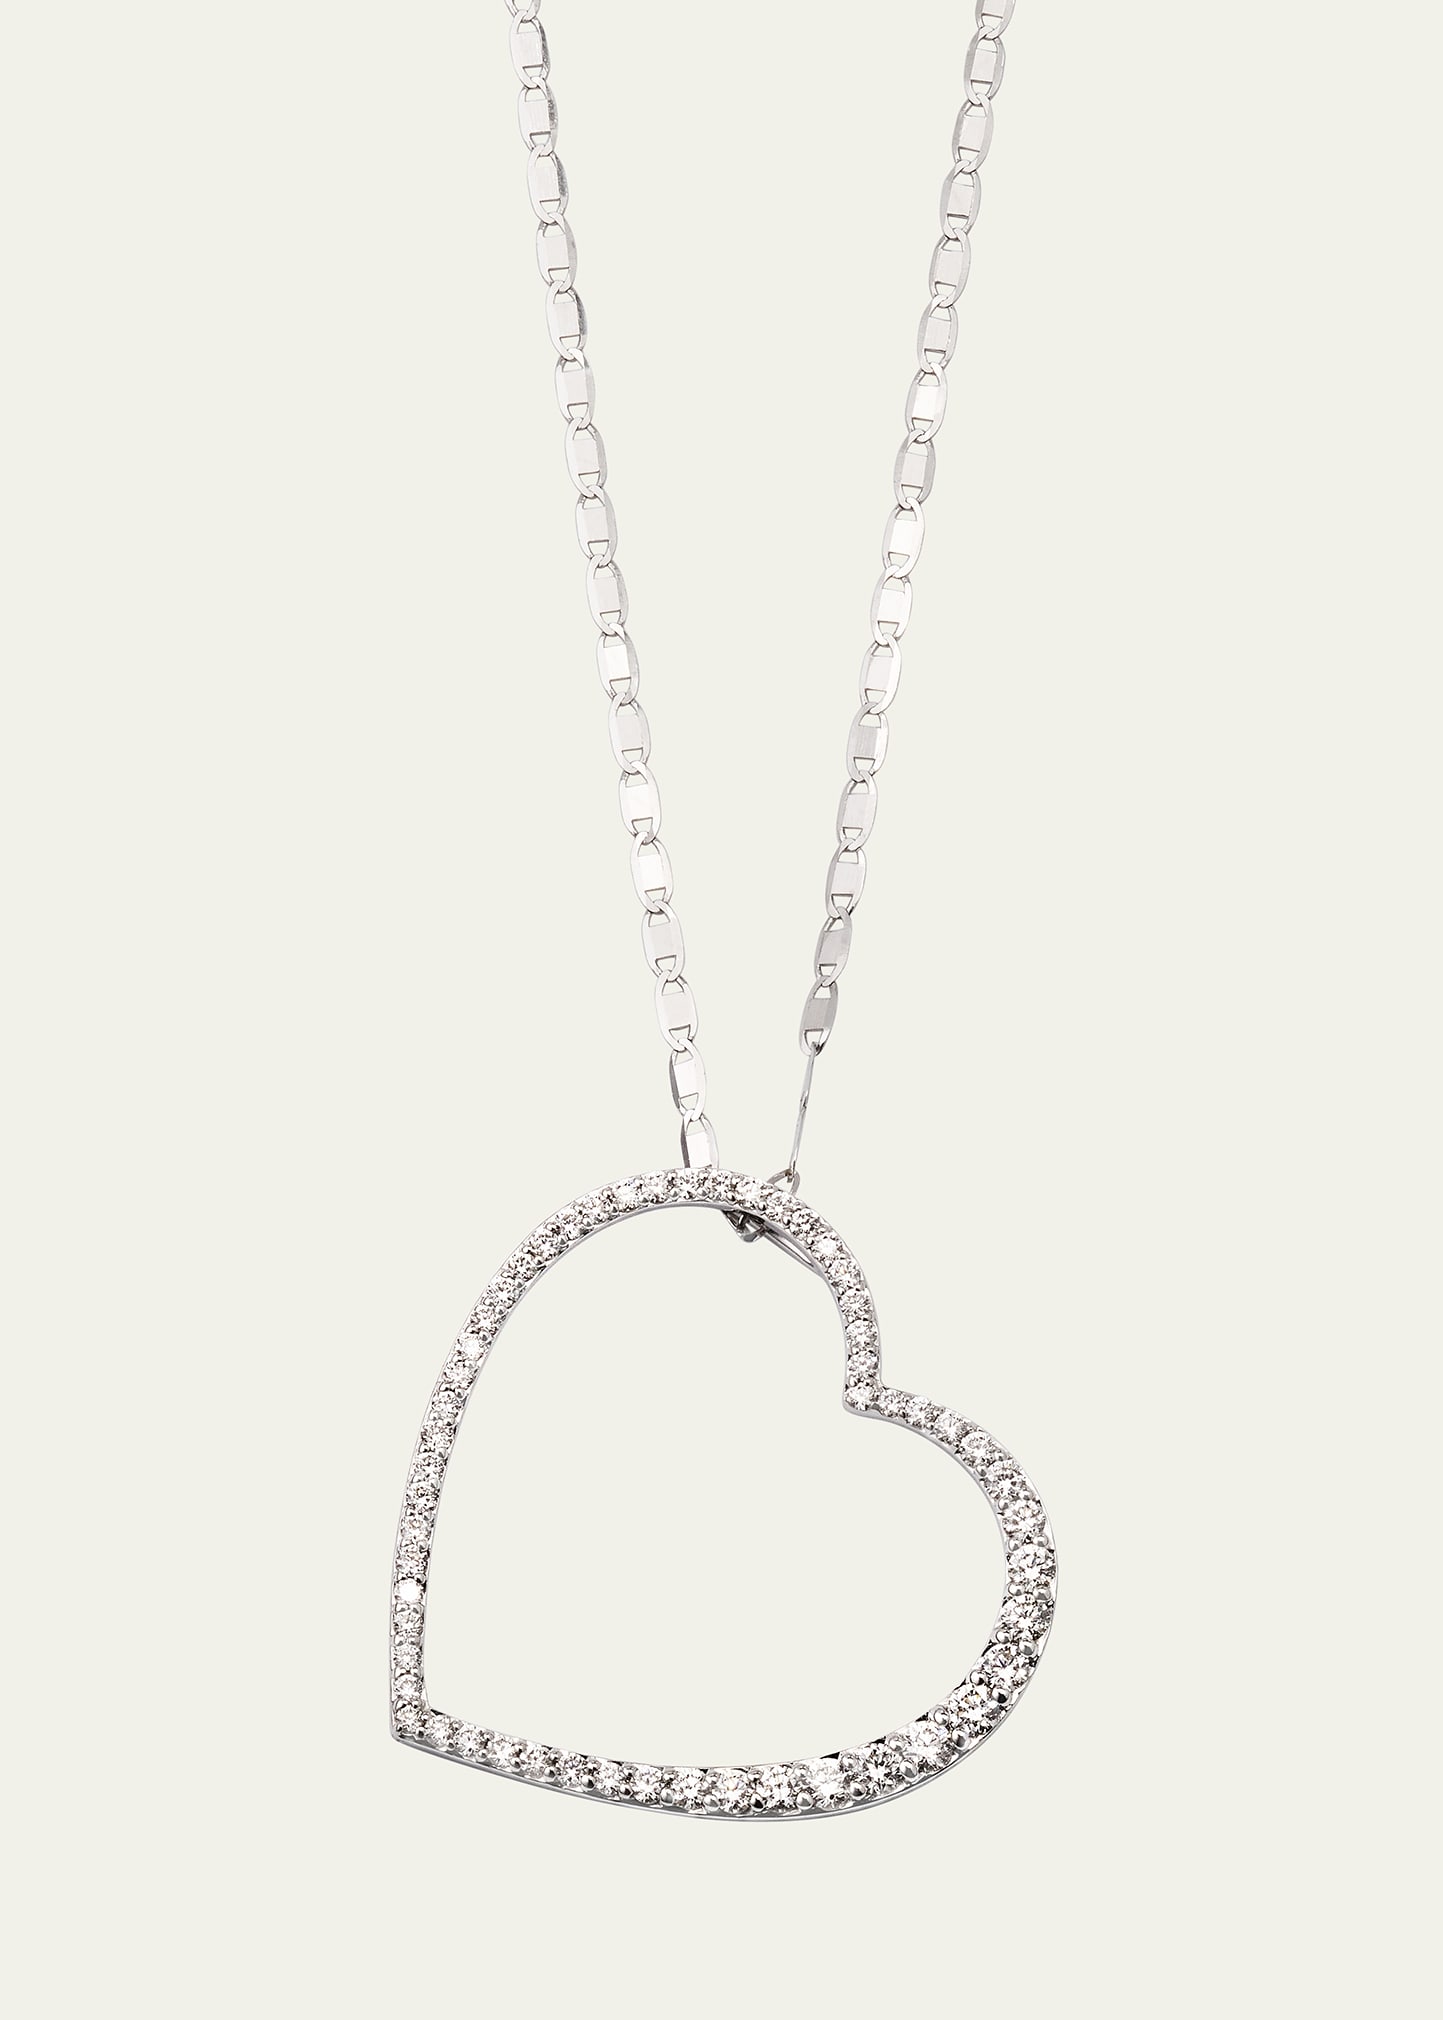 LANA Flawless Graduating Heart Pendant Necklace, 18"L